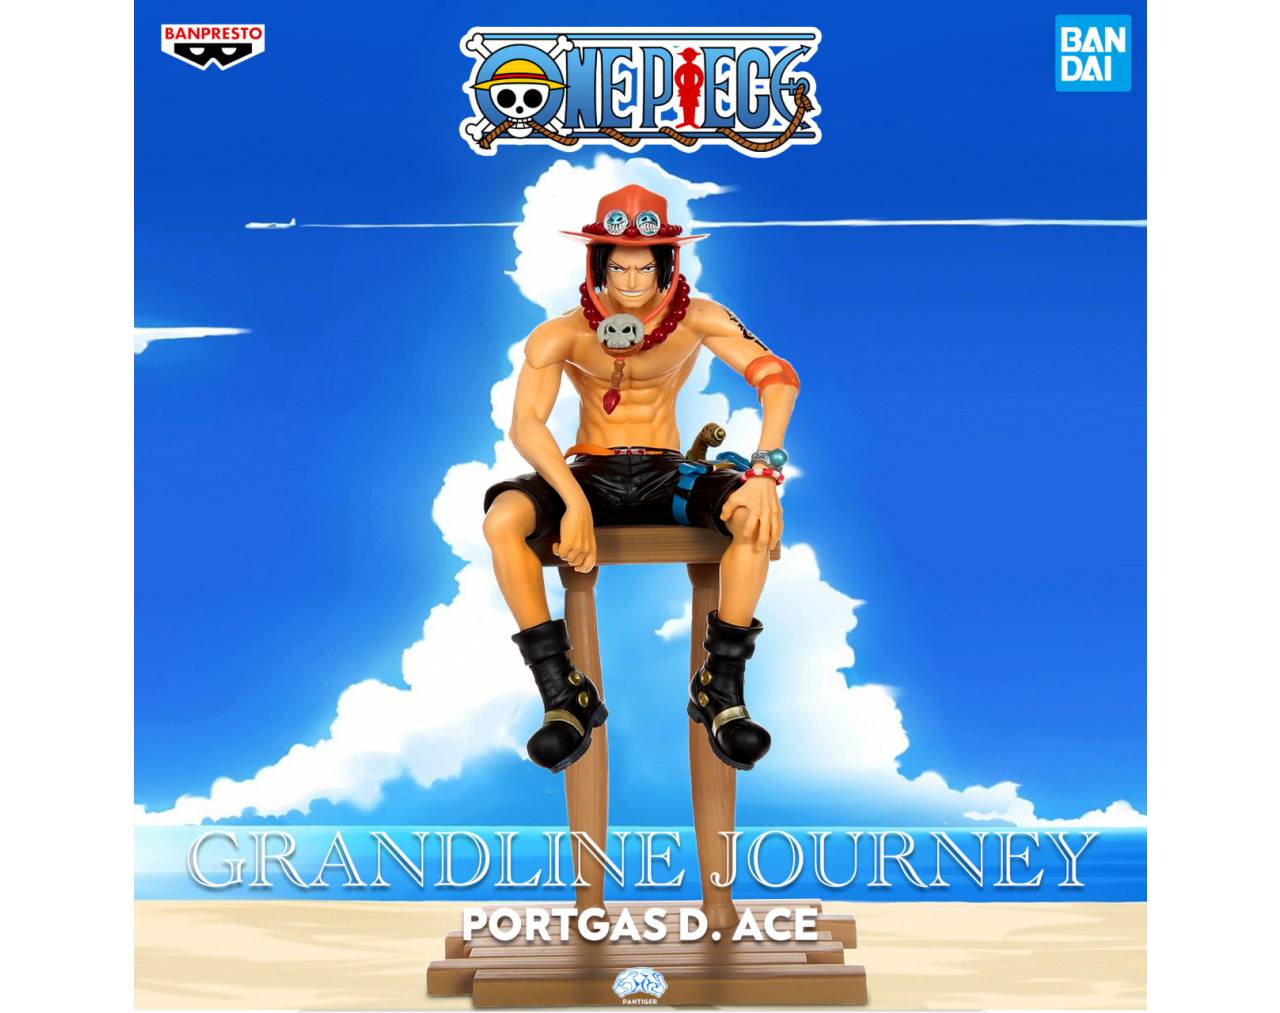 Portgas D. Ace - One Piece Grandline Journey Vol. 3 Banpresto